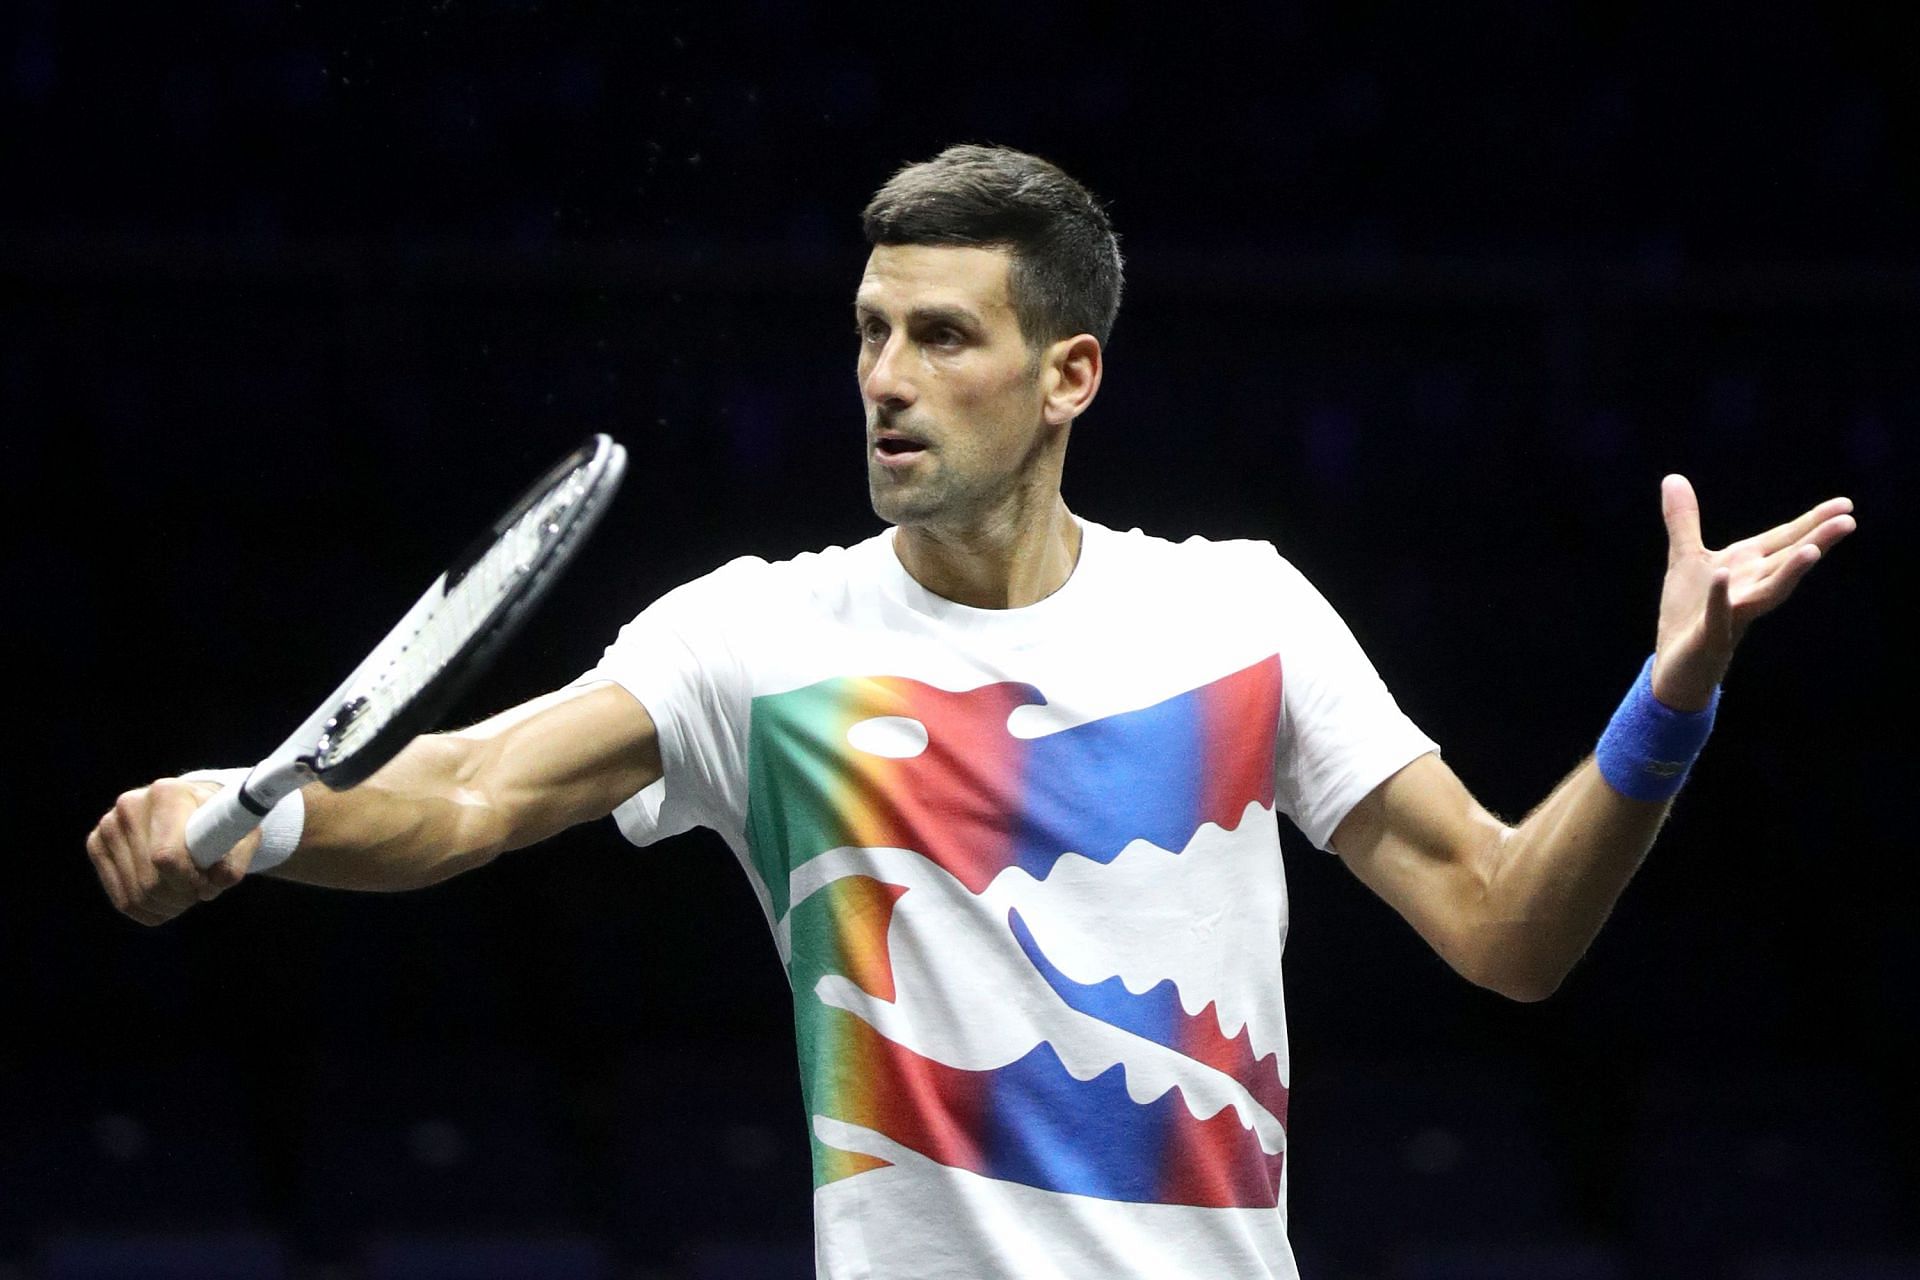 Novak Djokovic is currently ranked seventh